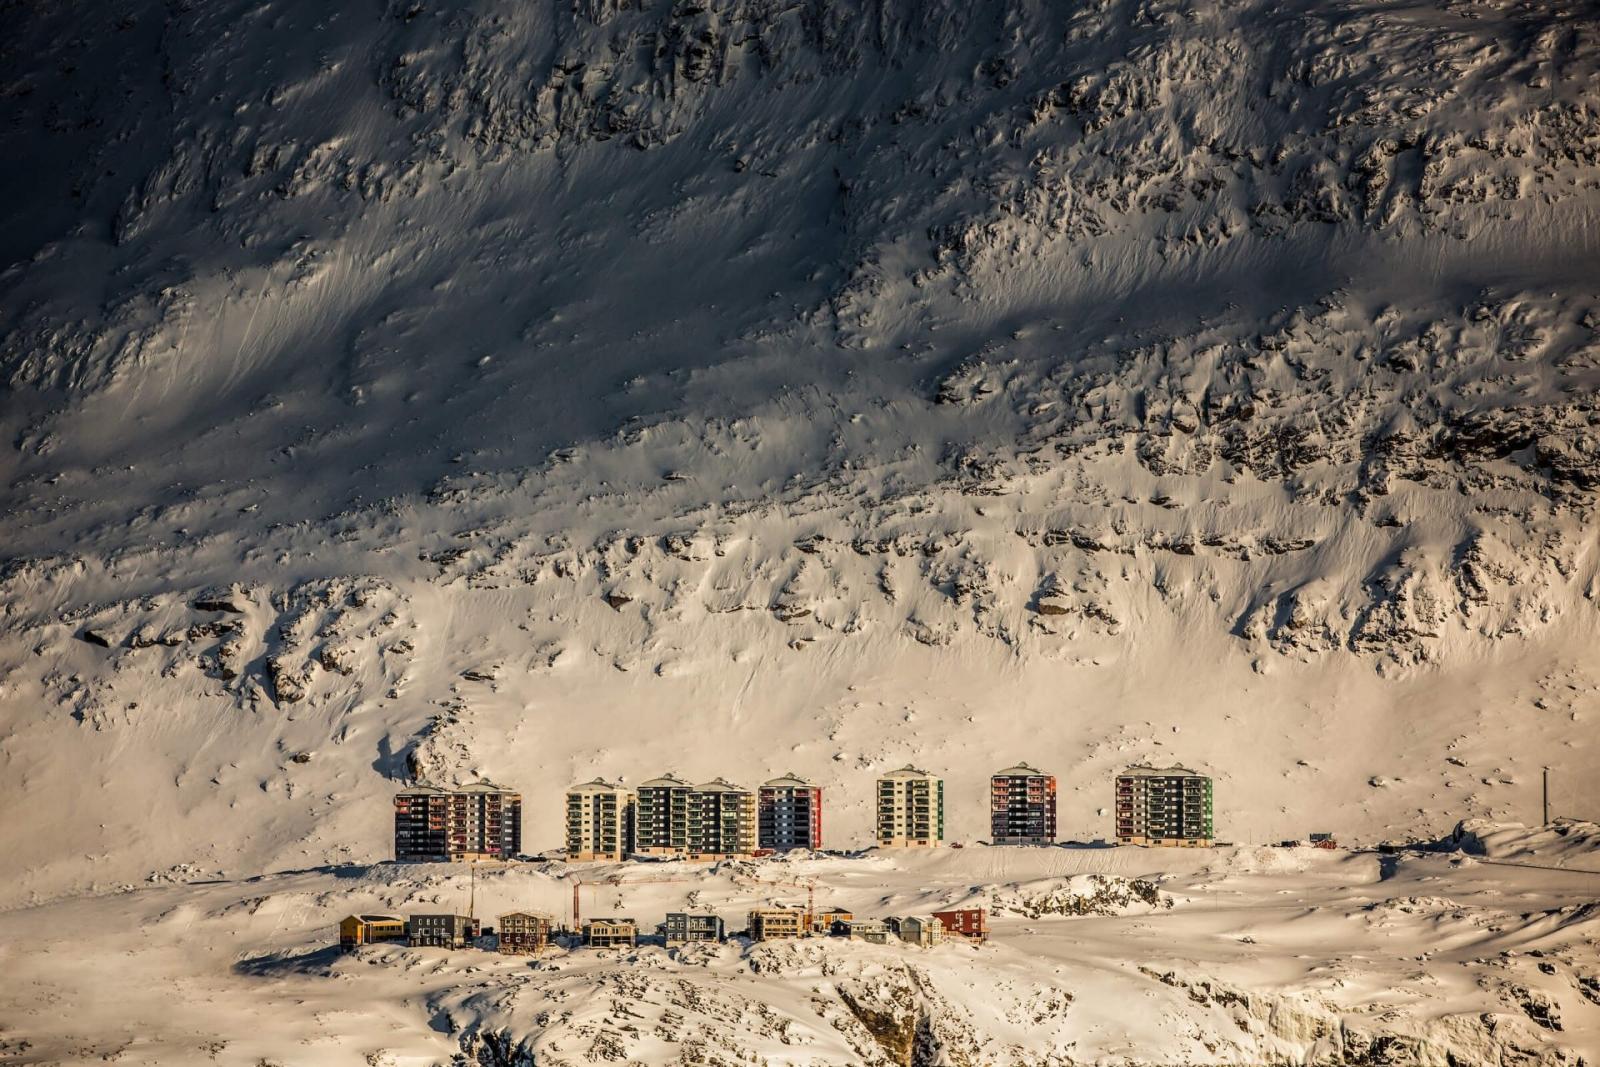 The Suloraq towers in Nuuk's suburb Qinngorput nestled below the mountain Ukkusissaq in Greenland